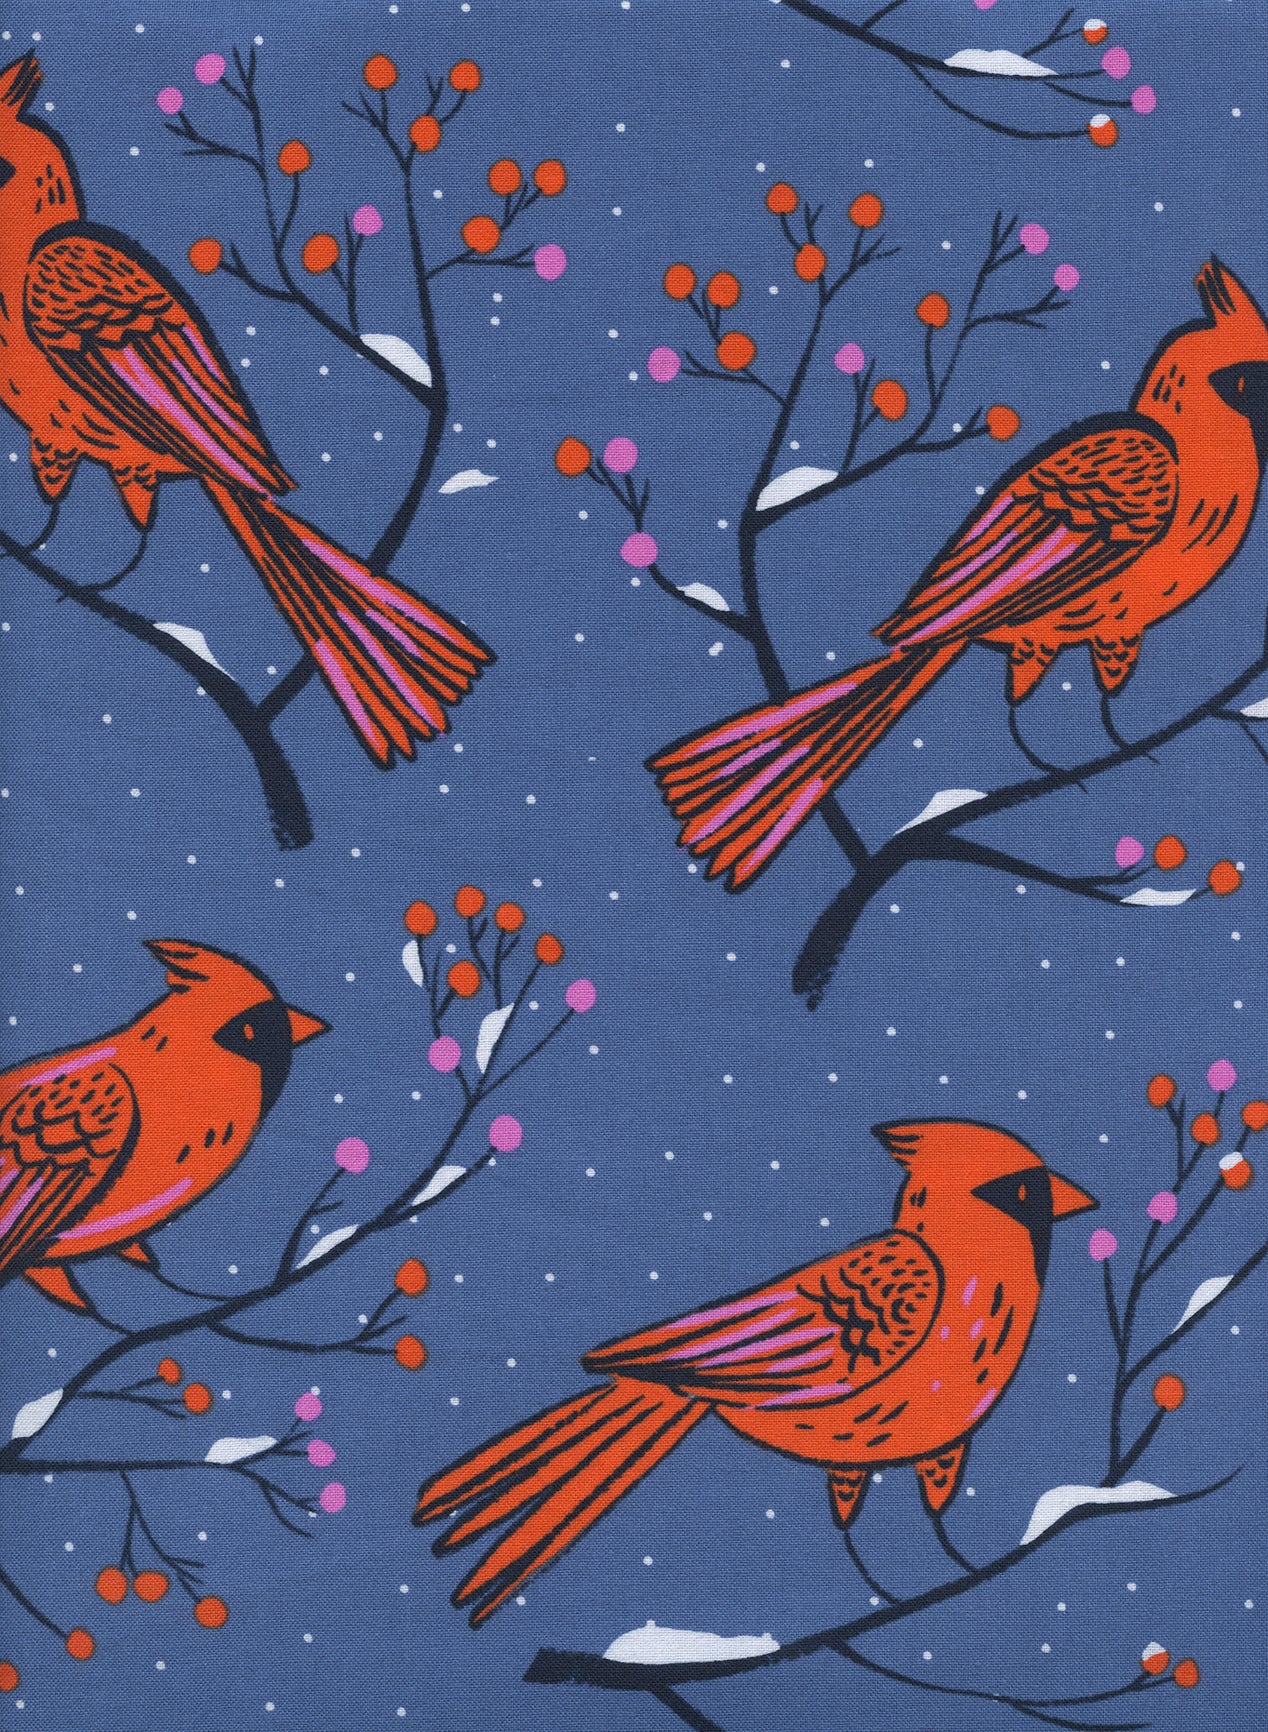 C+S Frost - Winter Cardinals - Blue Fabric